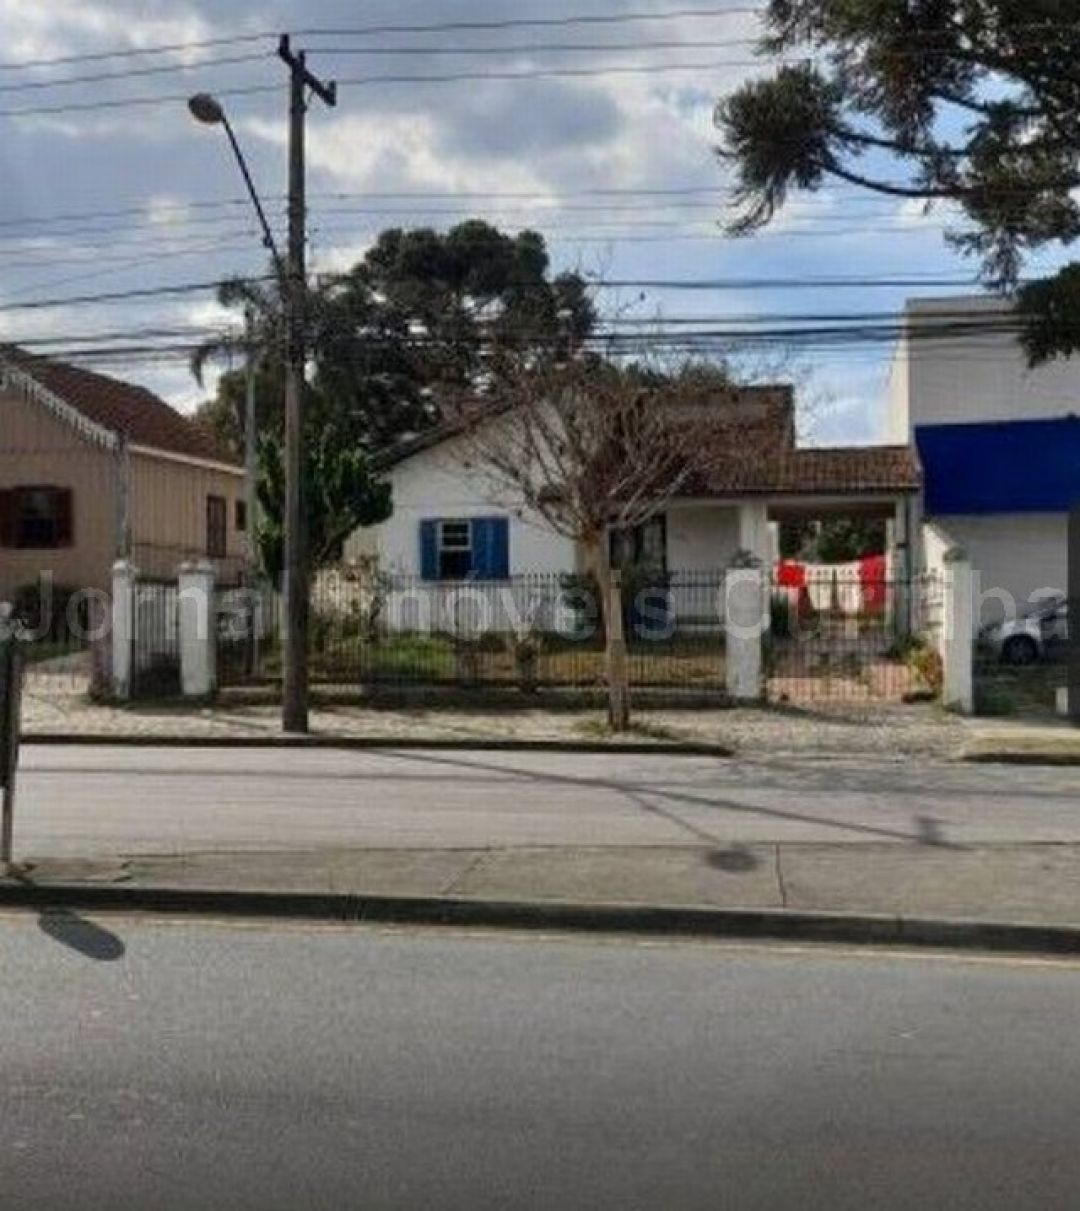 Vendo casa comercial/residencial, no Bom Retiro, bairro nobre de Curitiba.